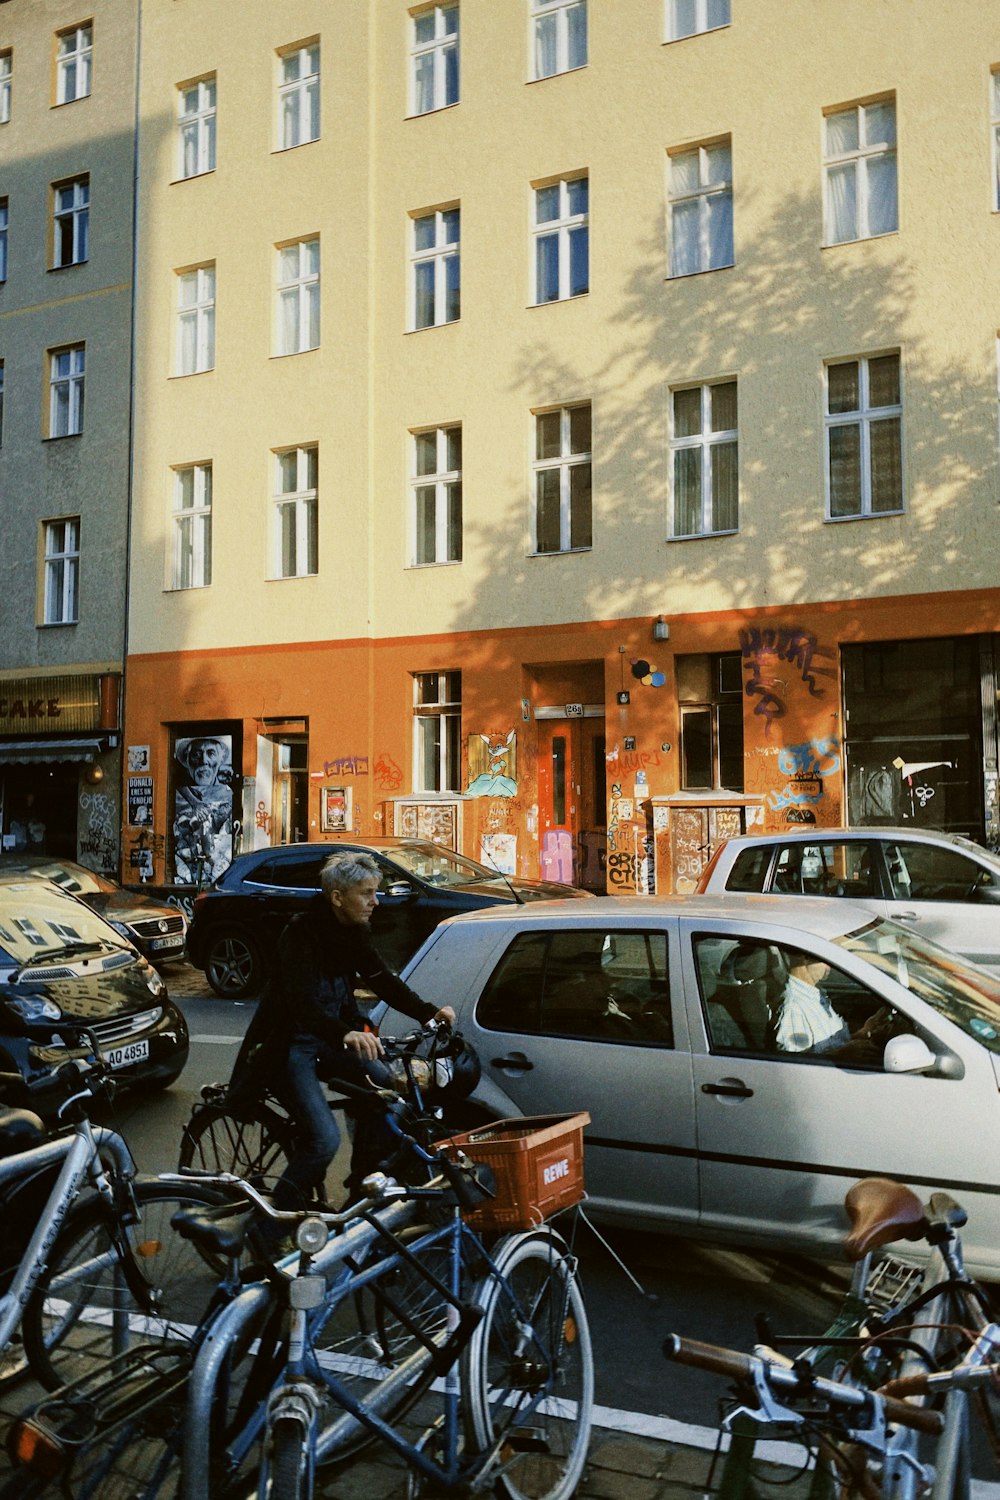 a man riding a bike down a street next to parked cars